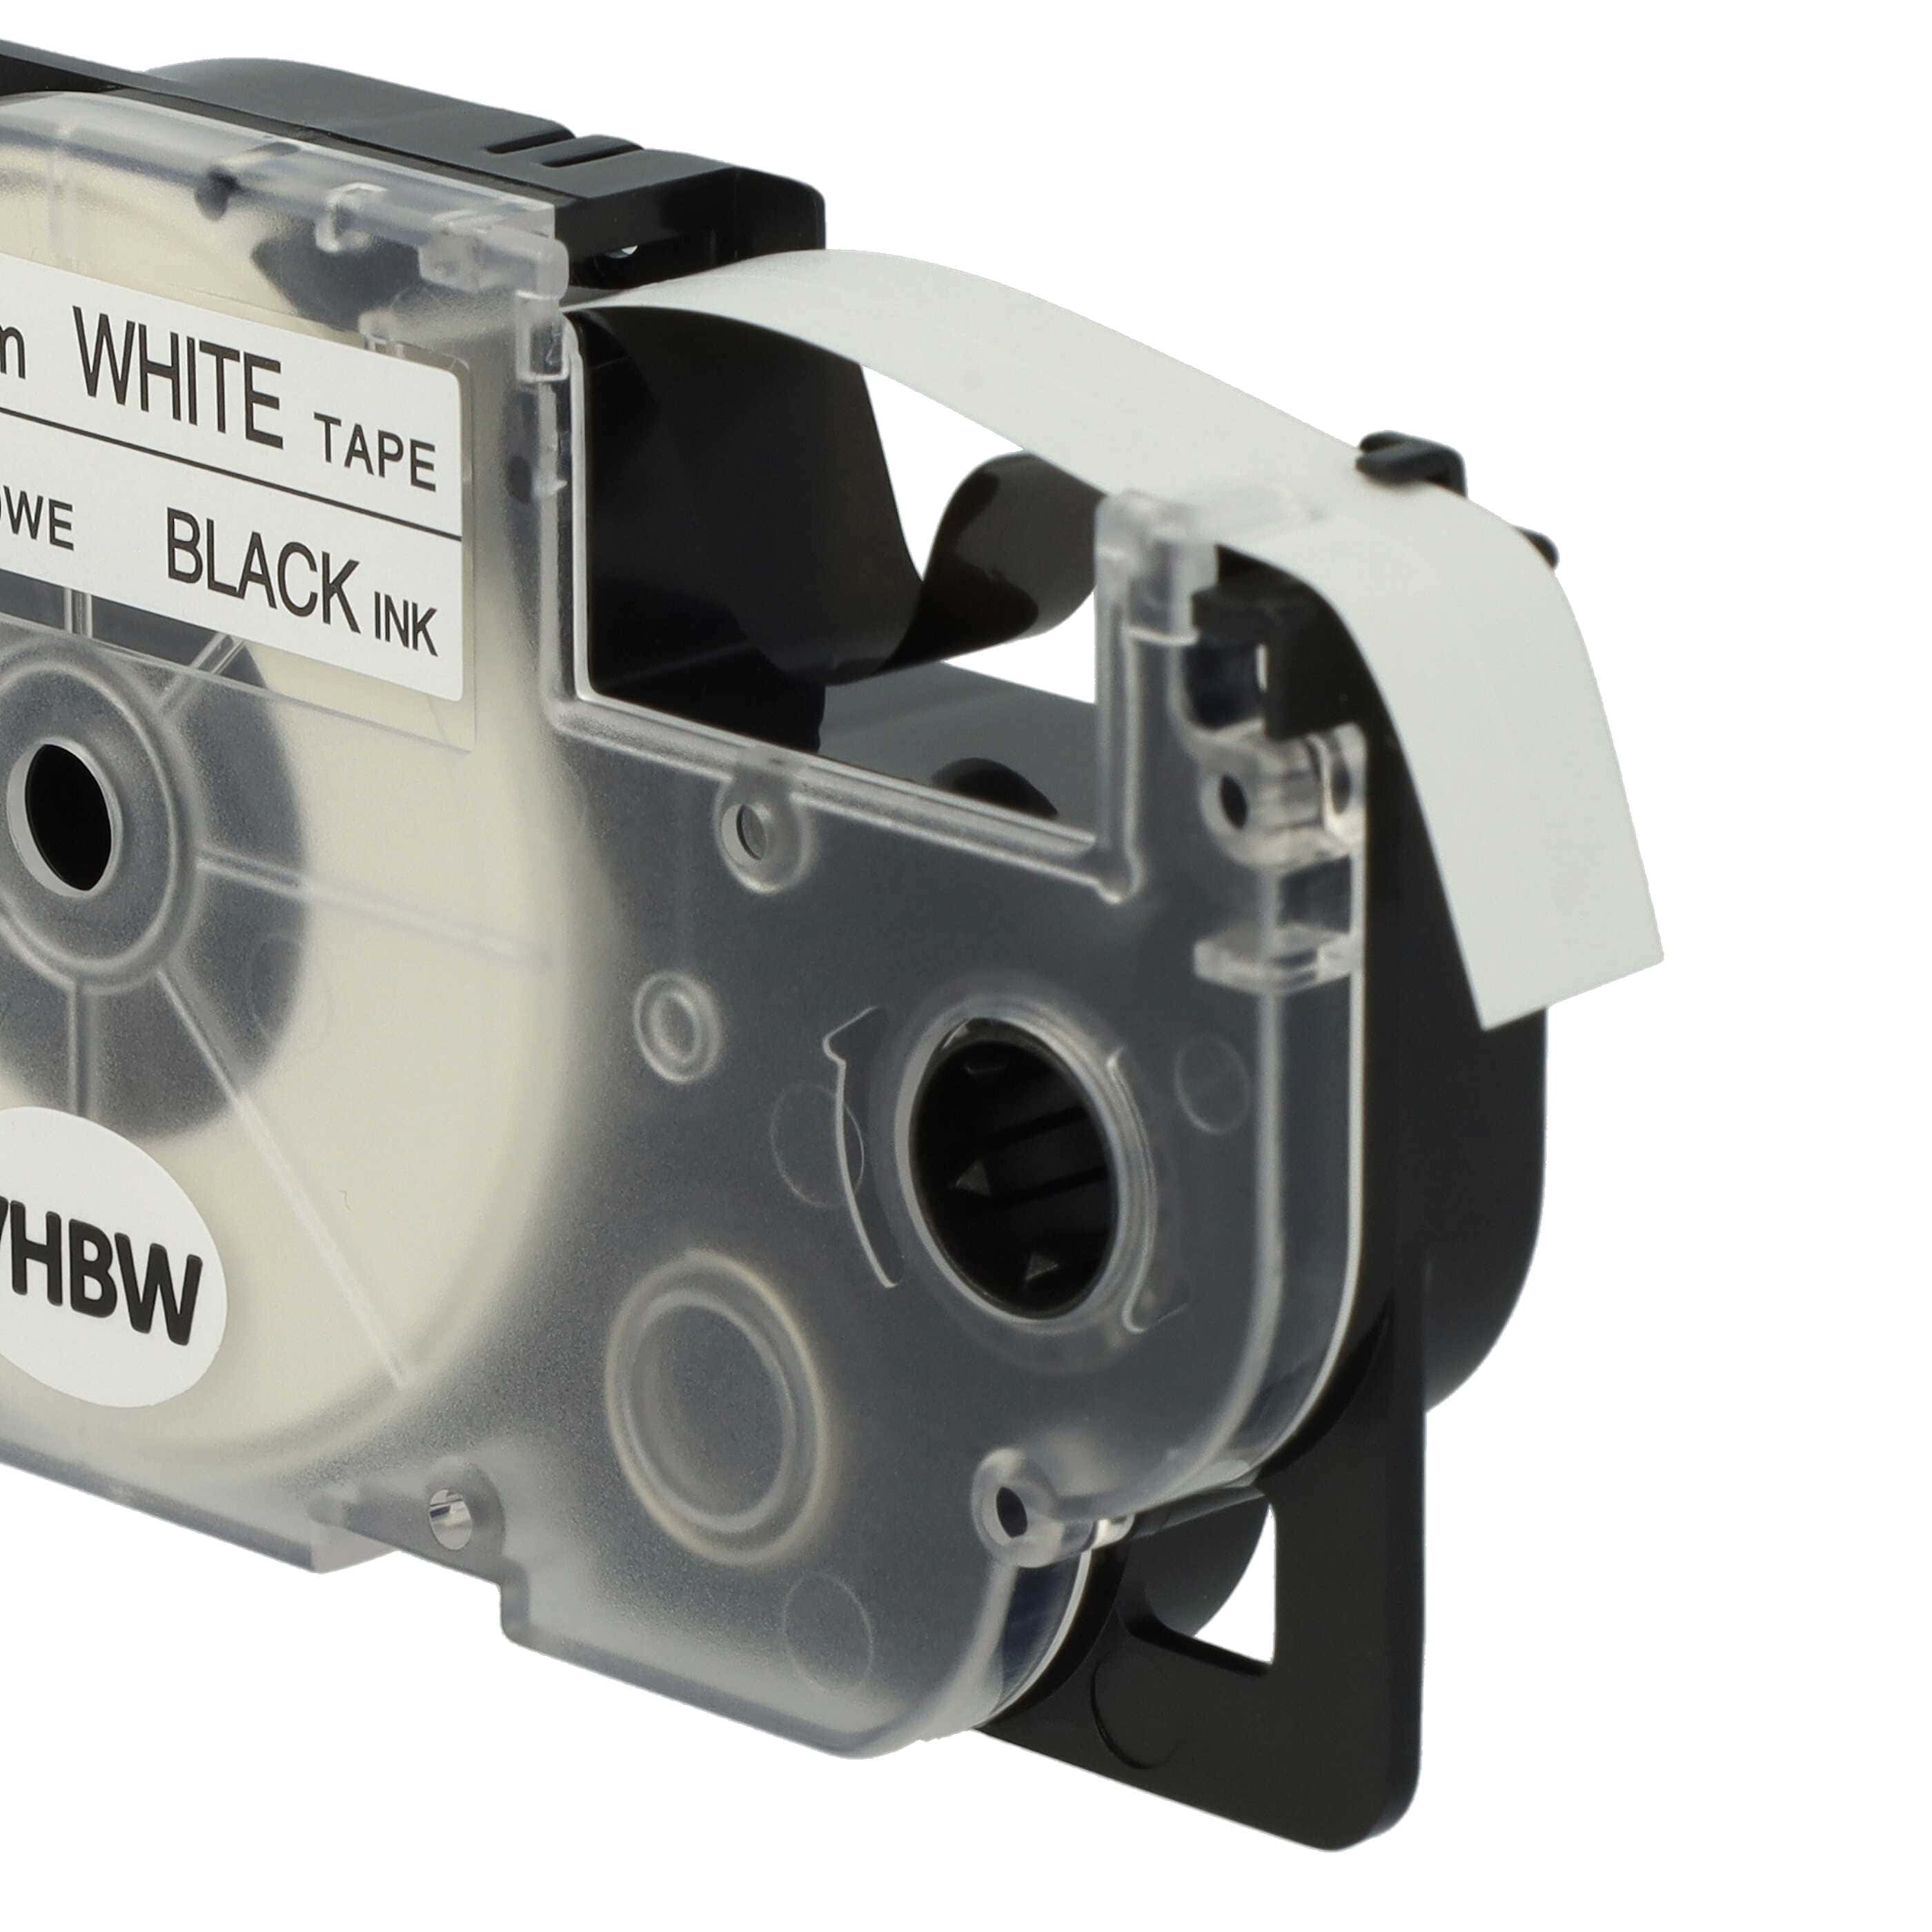 3x Casete cinta escritura reemplaza Casio XR-9WE1, XR-9WE Negro su Blanco